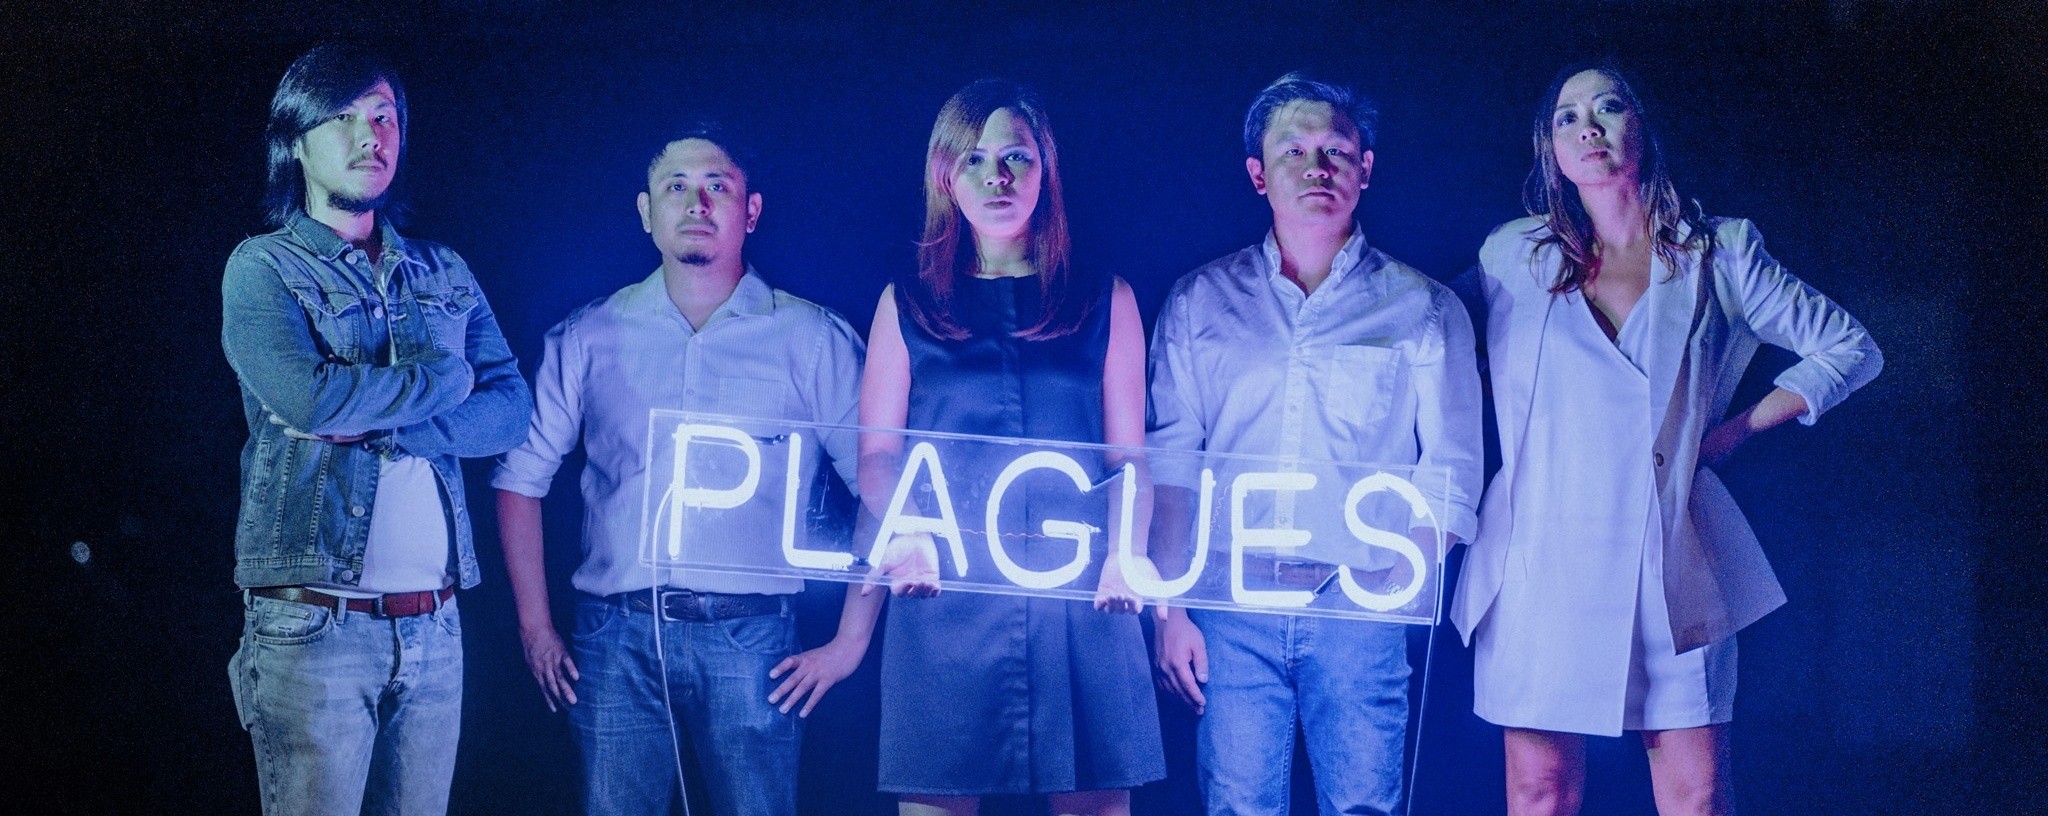 Taken by Cars' Plagues Vinyl Launch Party